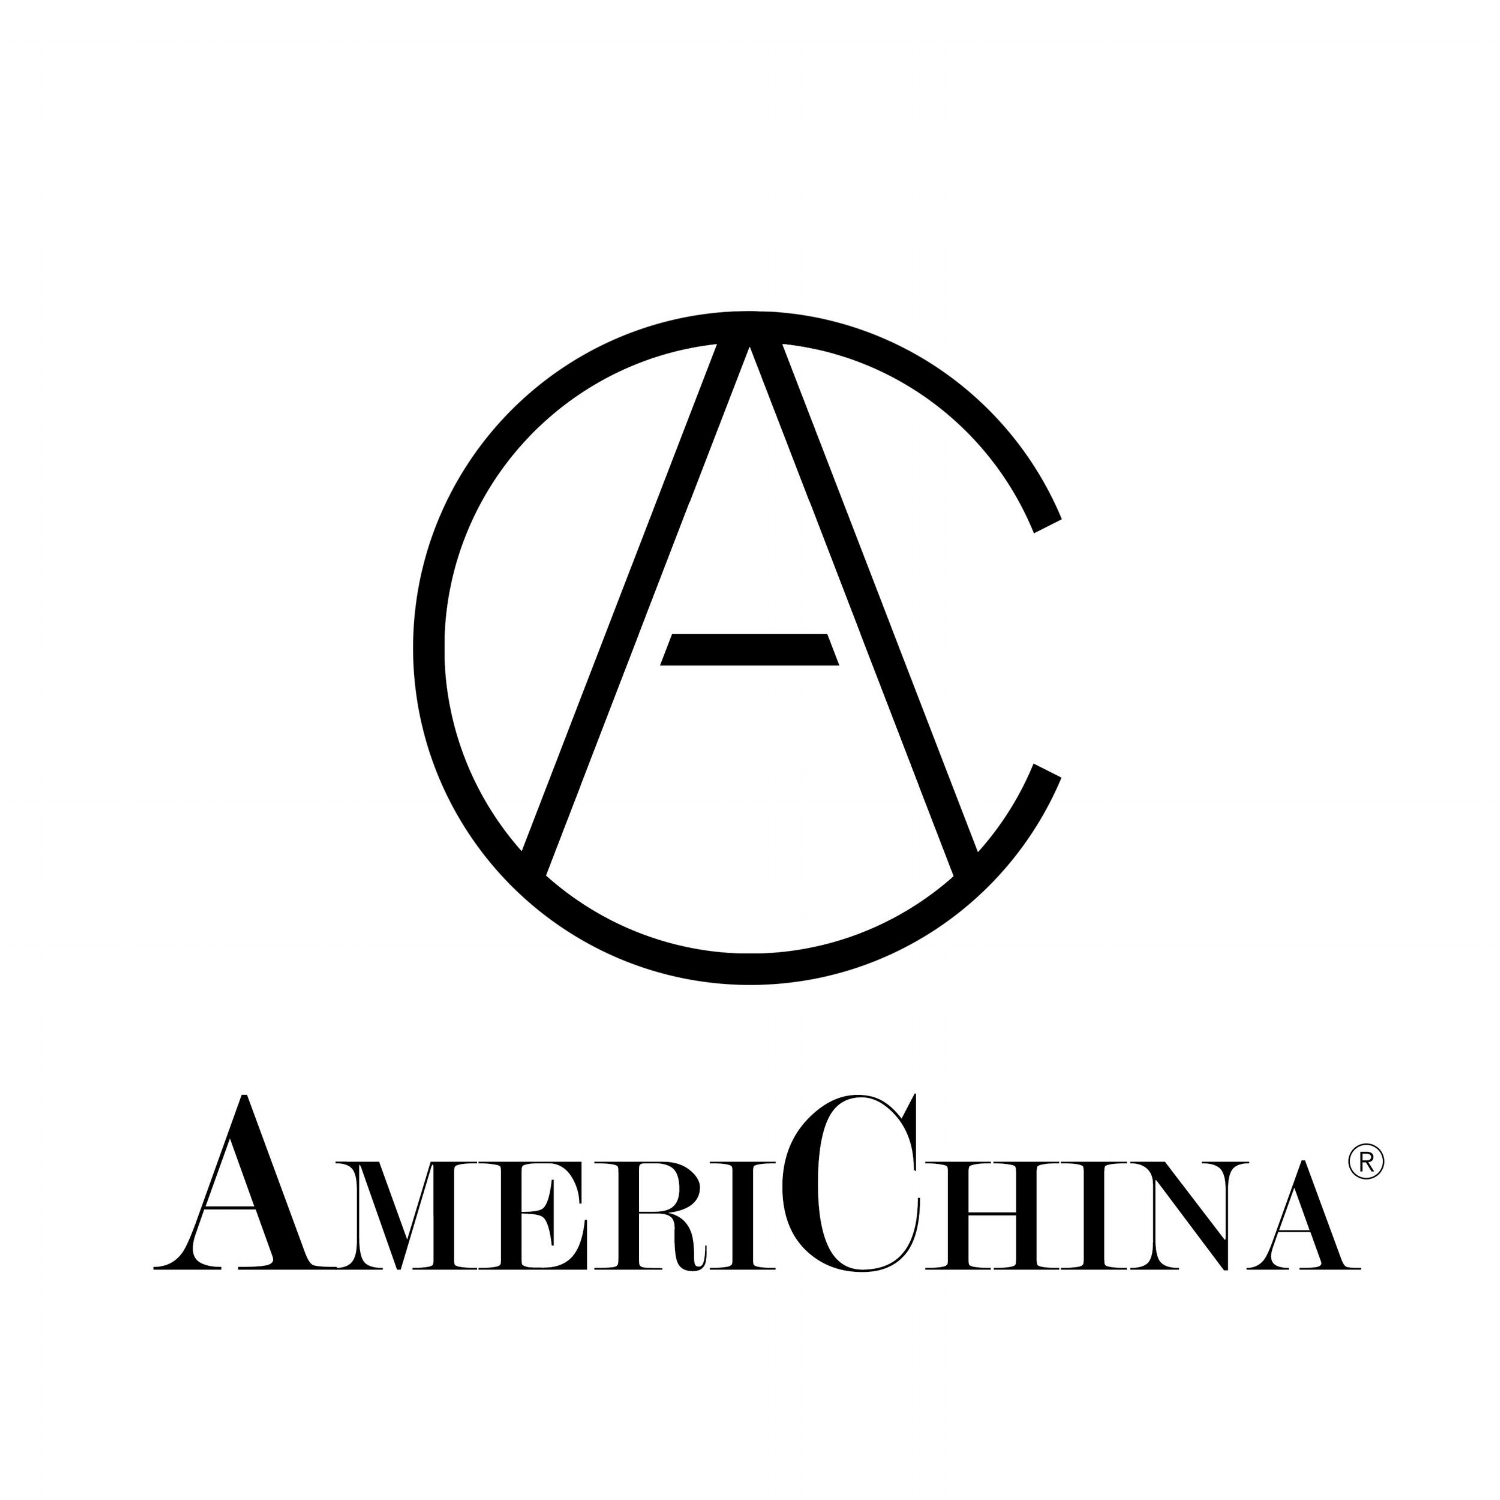 AmeriChina logo.jpg